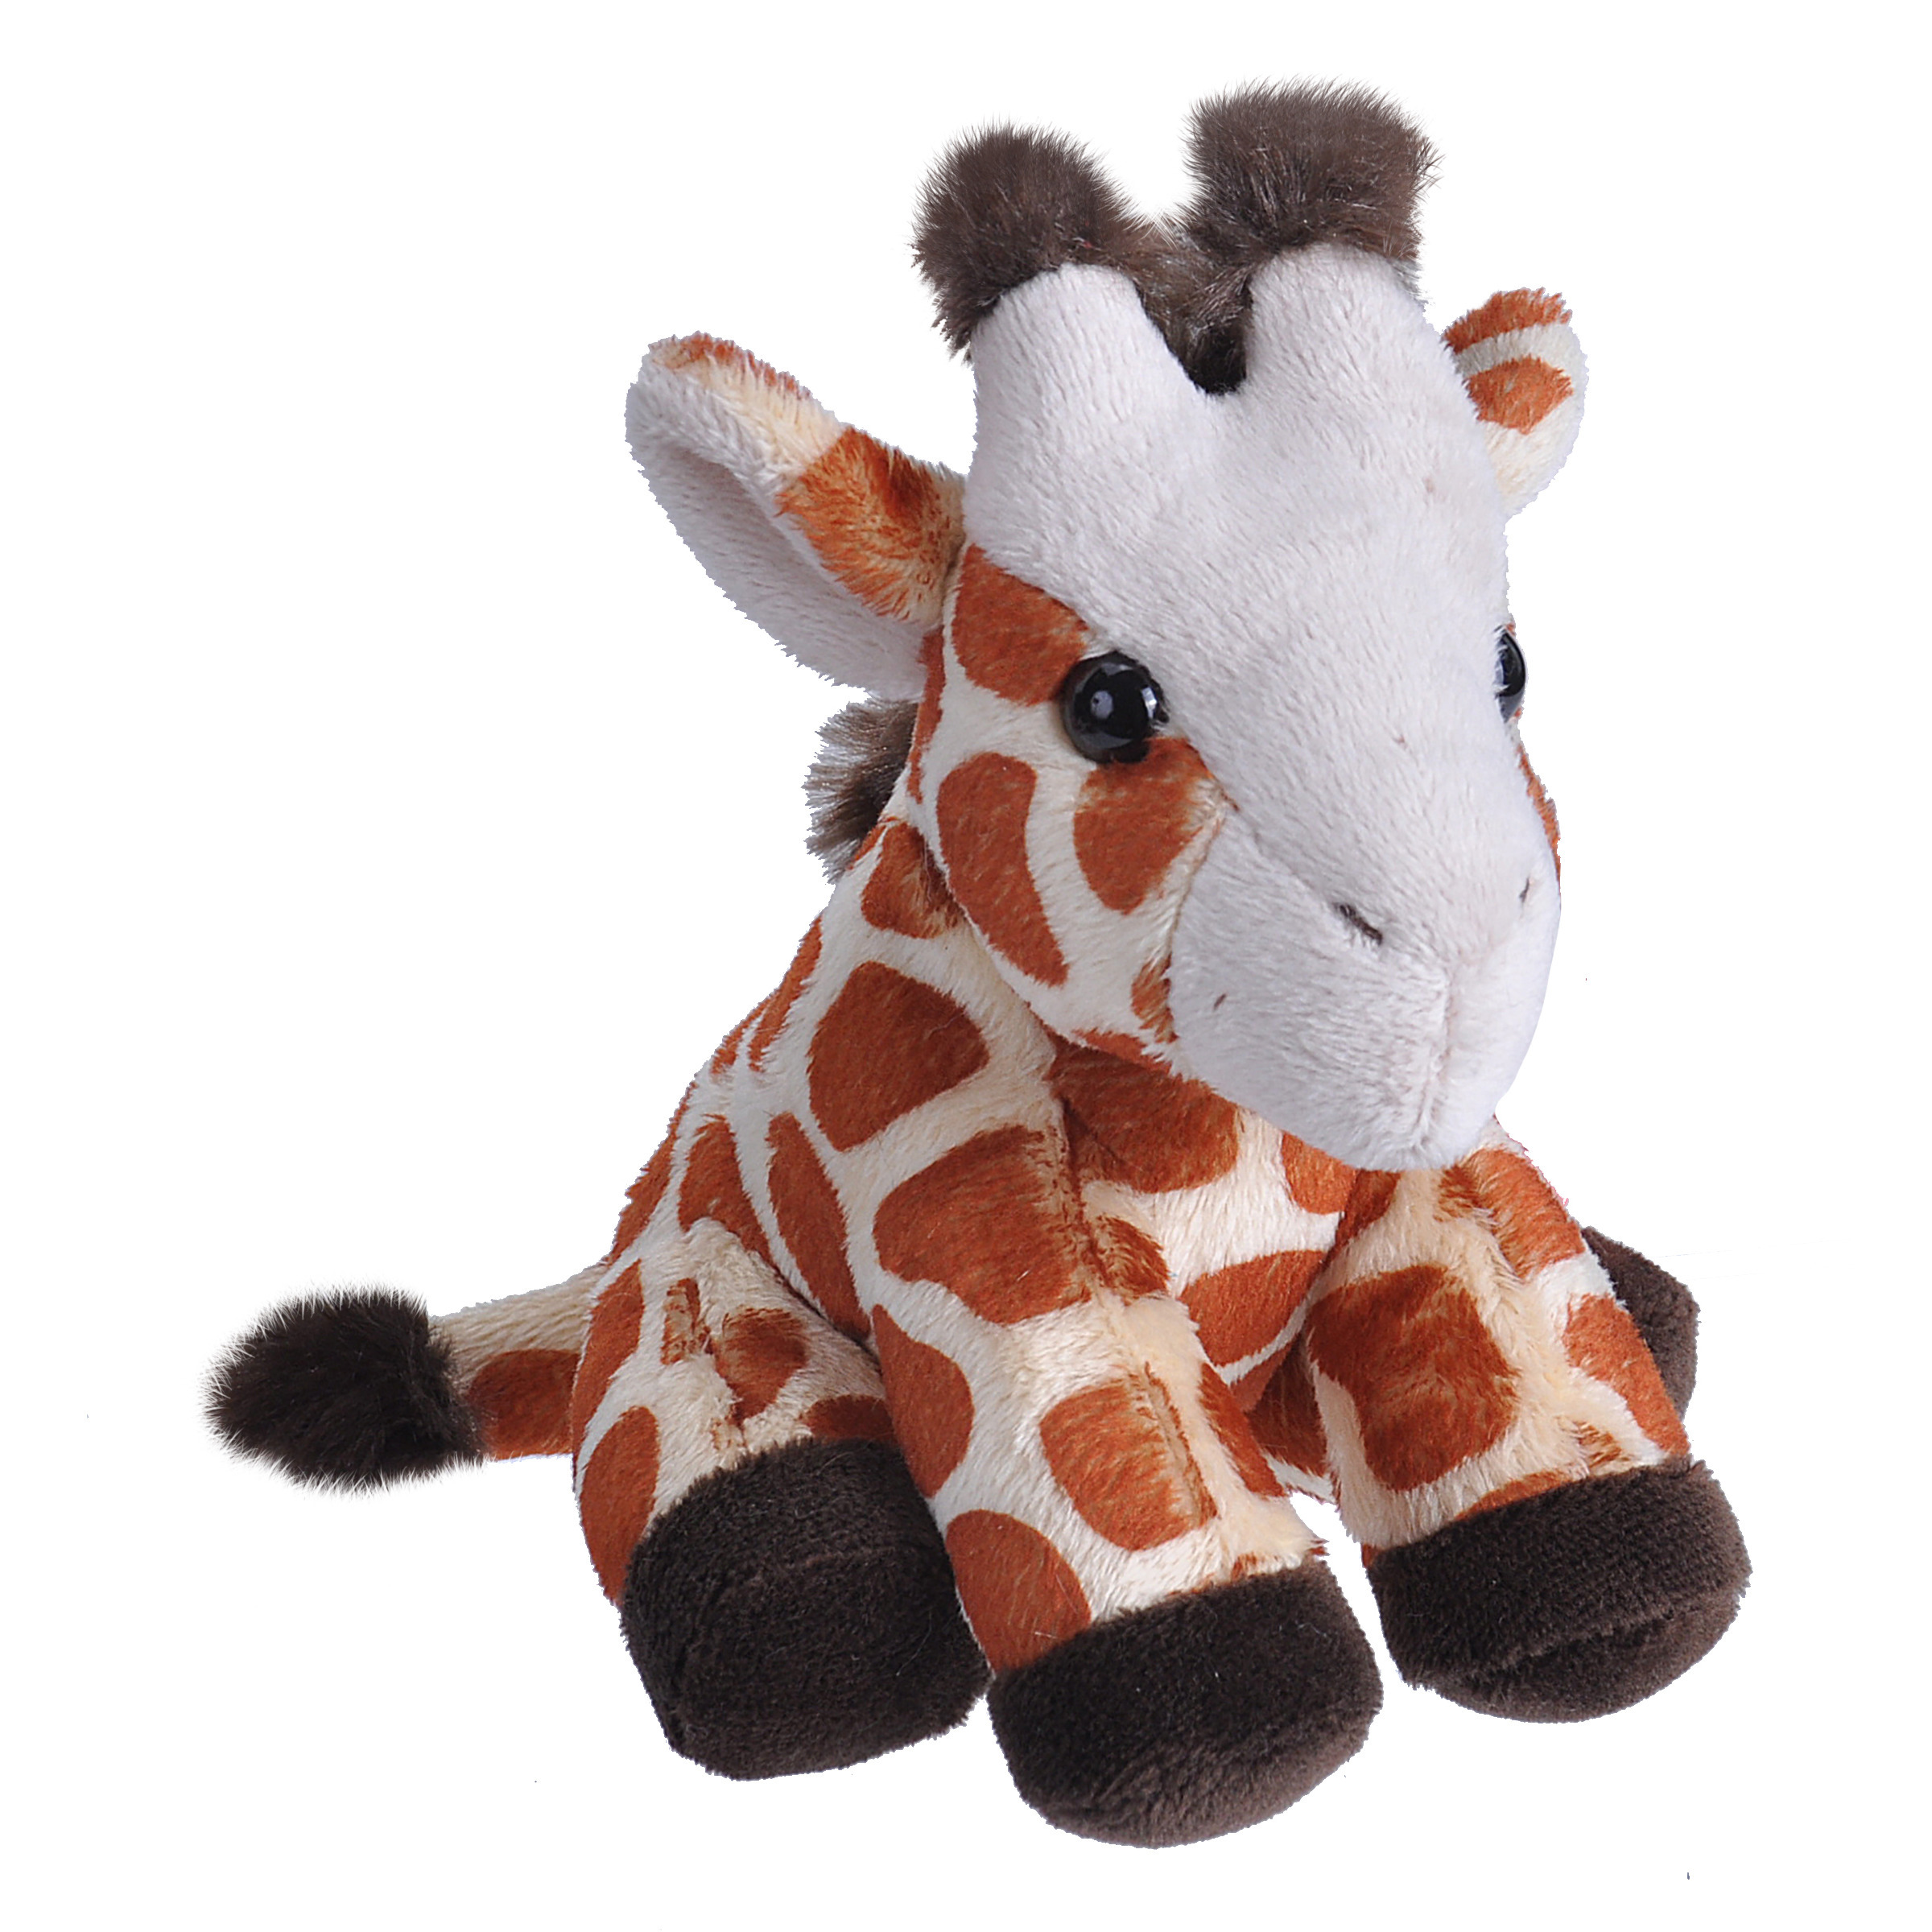 Pluche knuffel Giraffe van 13 cm